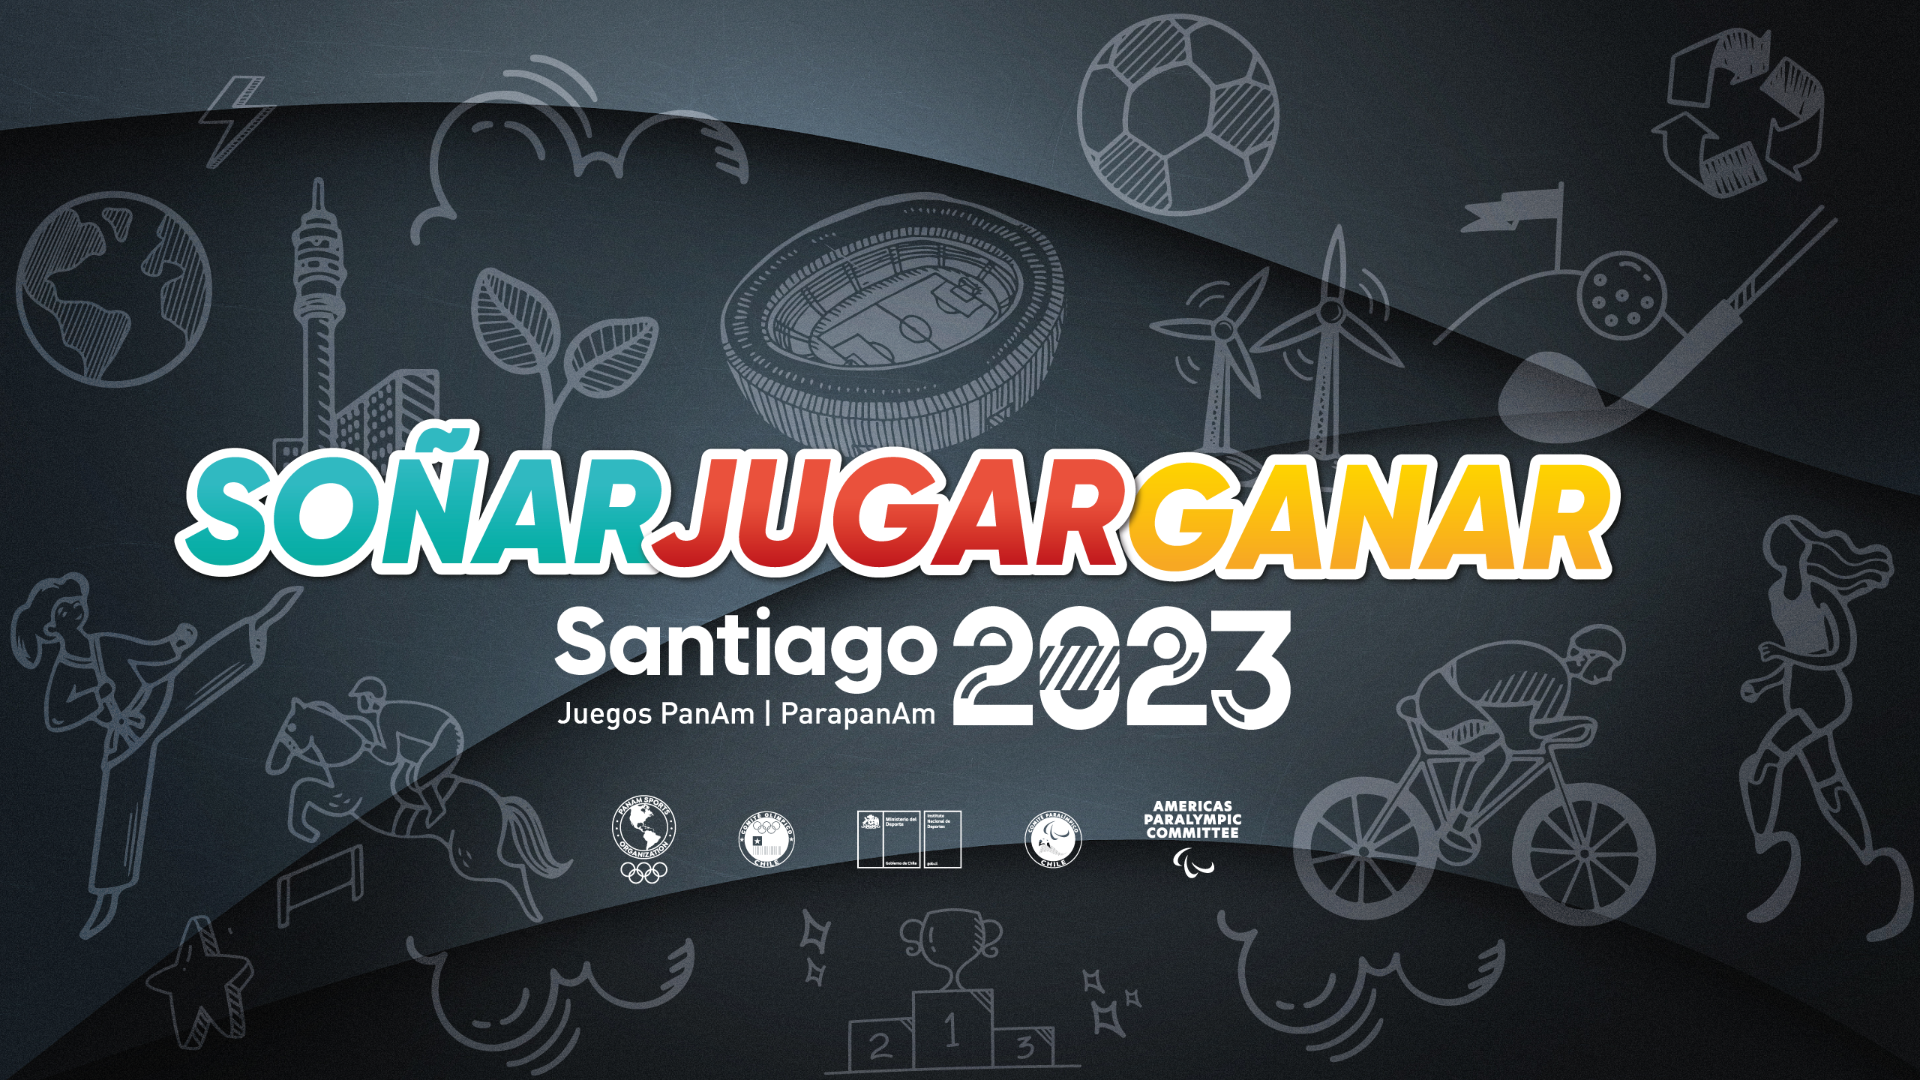 Panam Sports SANTIAGO 2023 INVITA A LAS AMÉRICAS A “SOÑAR, JUGAR, GANAR” -  Panam Sports